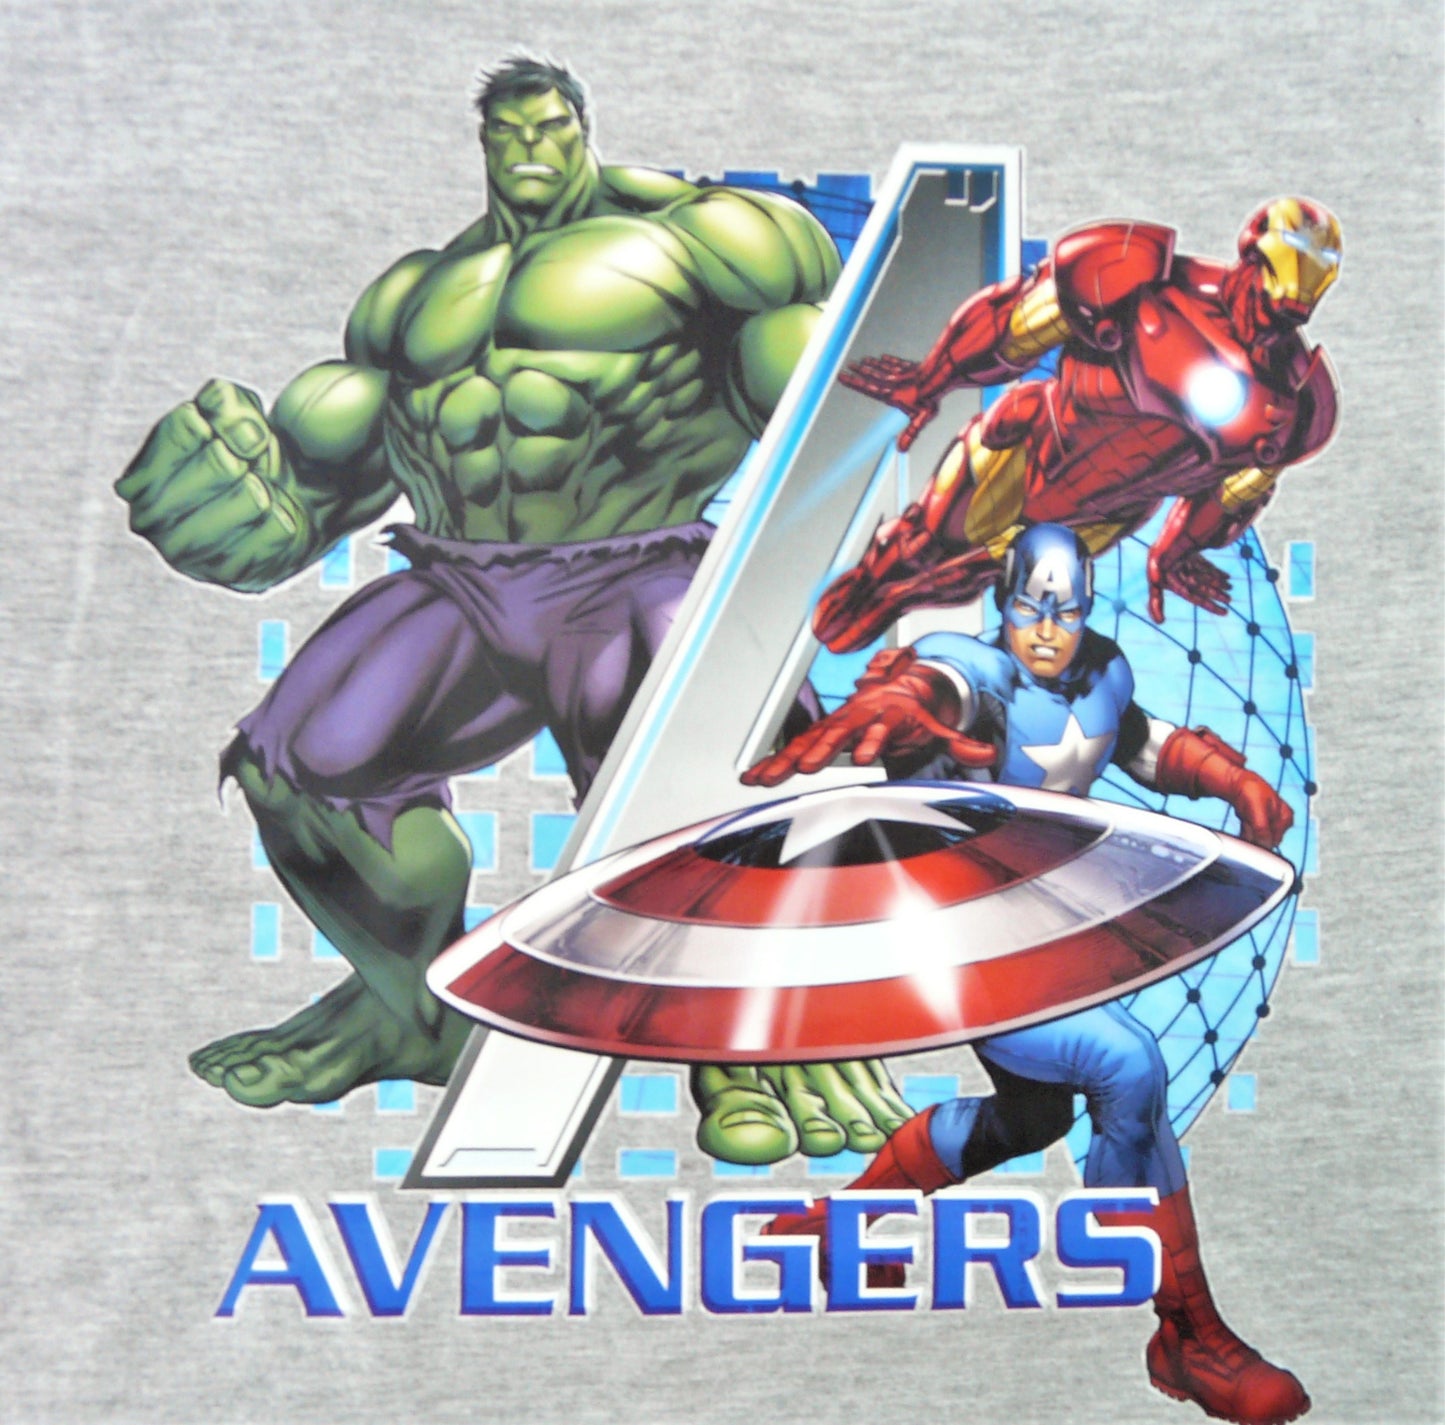 Marvel Avengers "Superhero" Boy's 2 Piece Pyjama Set